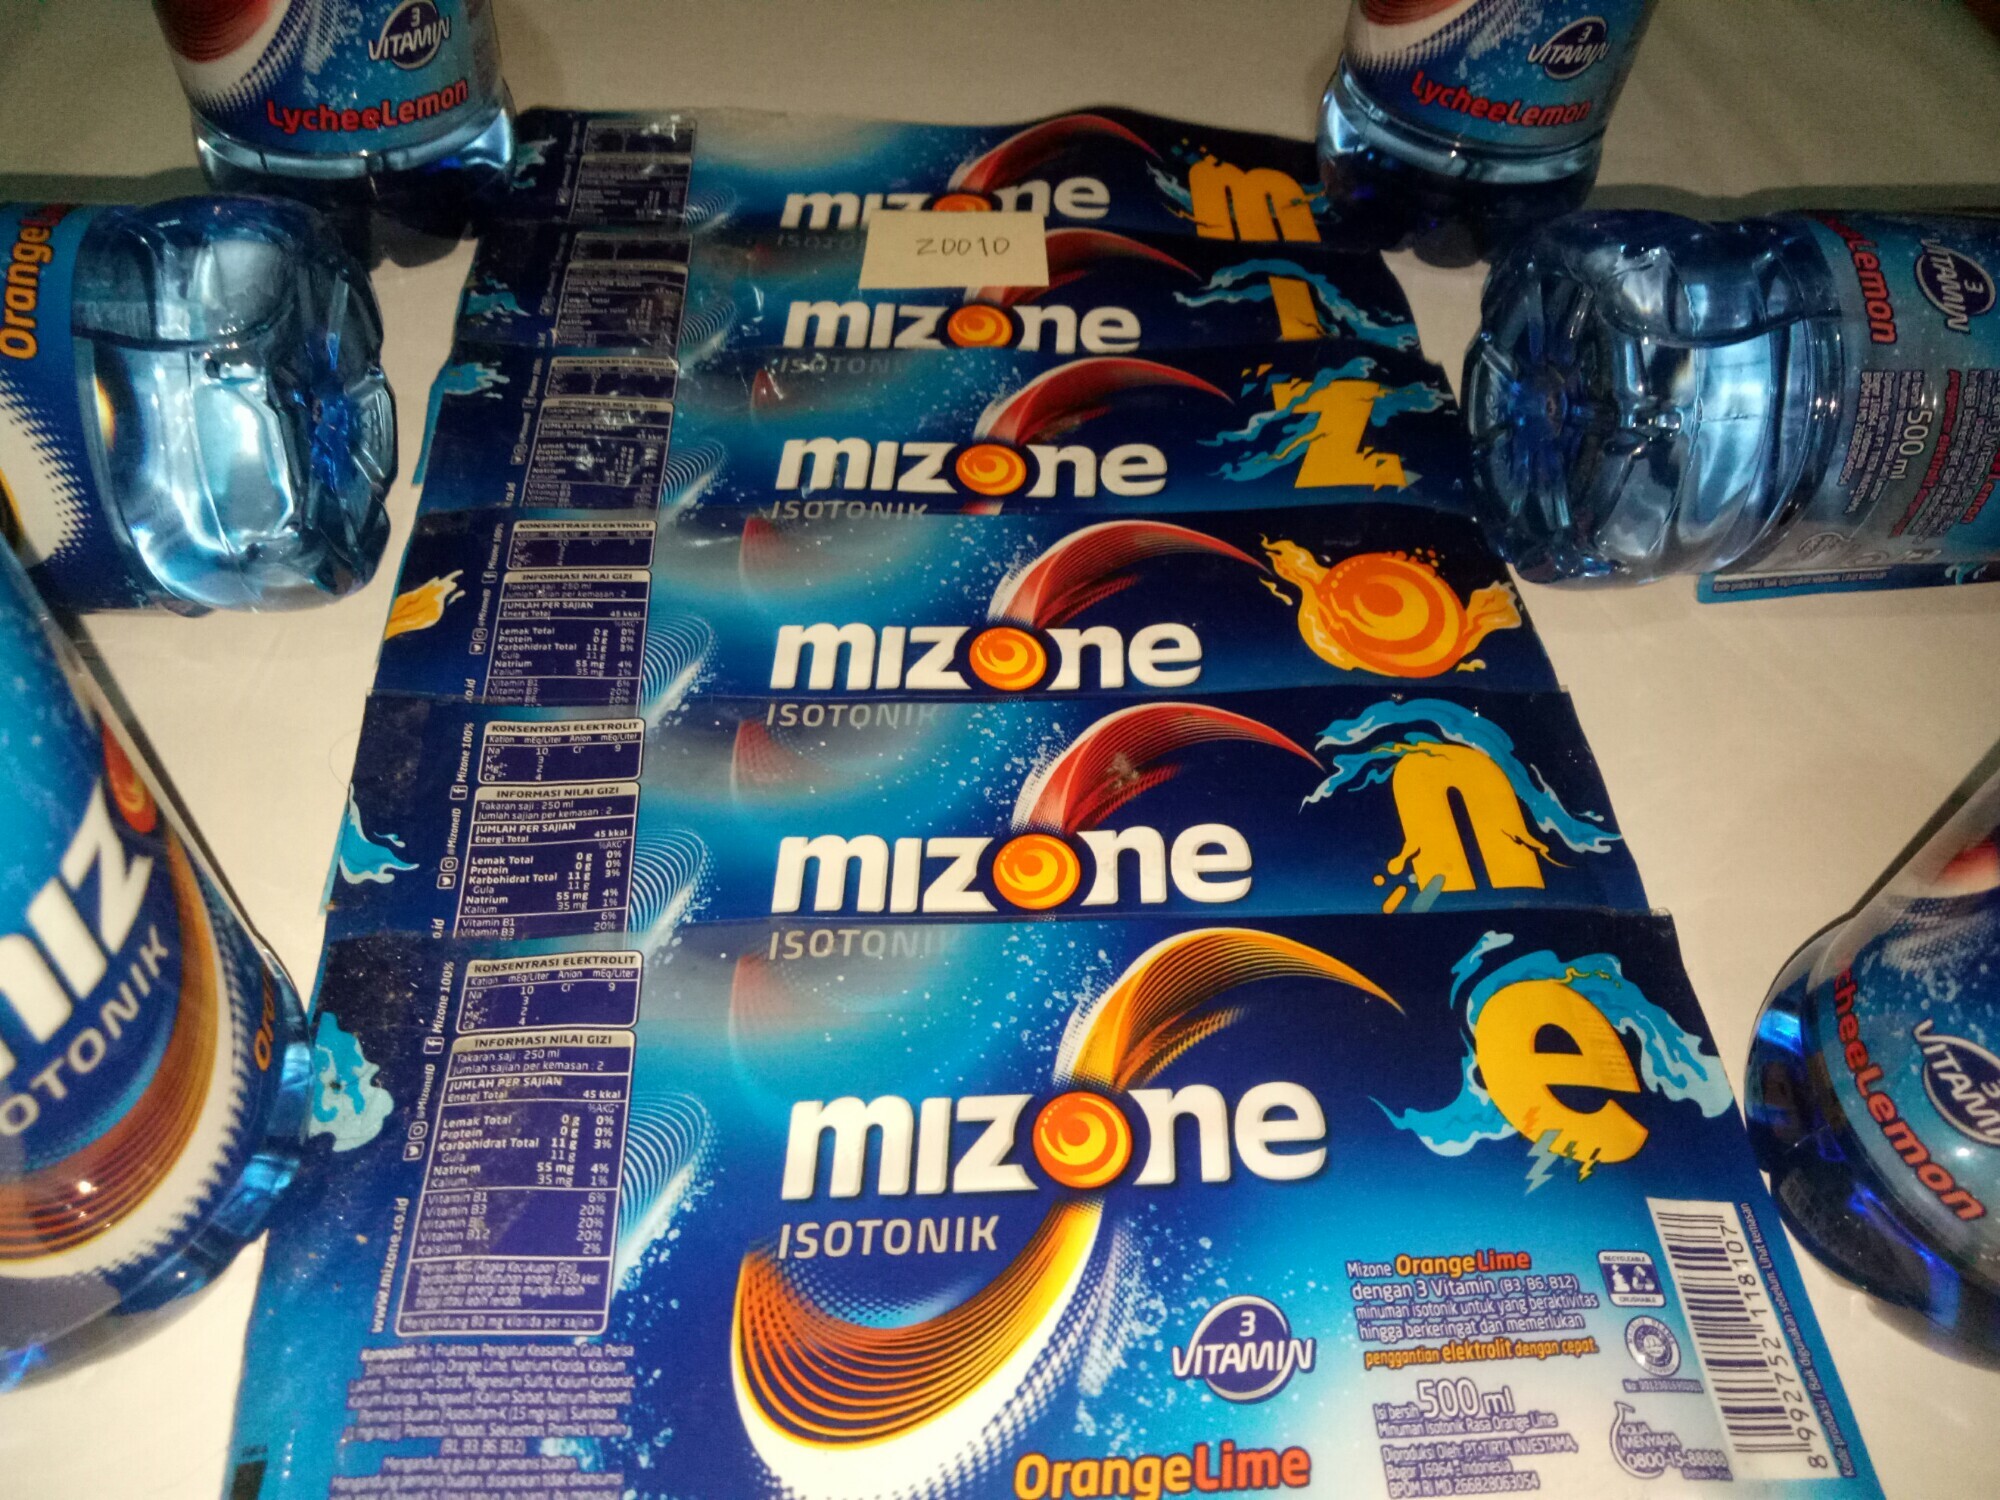 #KASKUSxMizone Lebaran Makin Semarak bersama Mizone